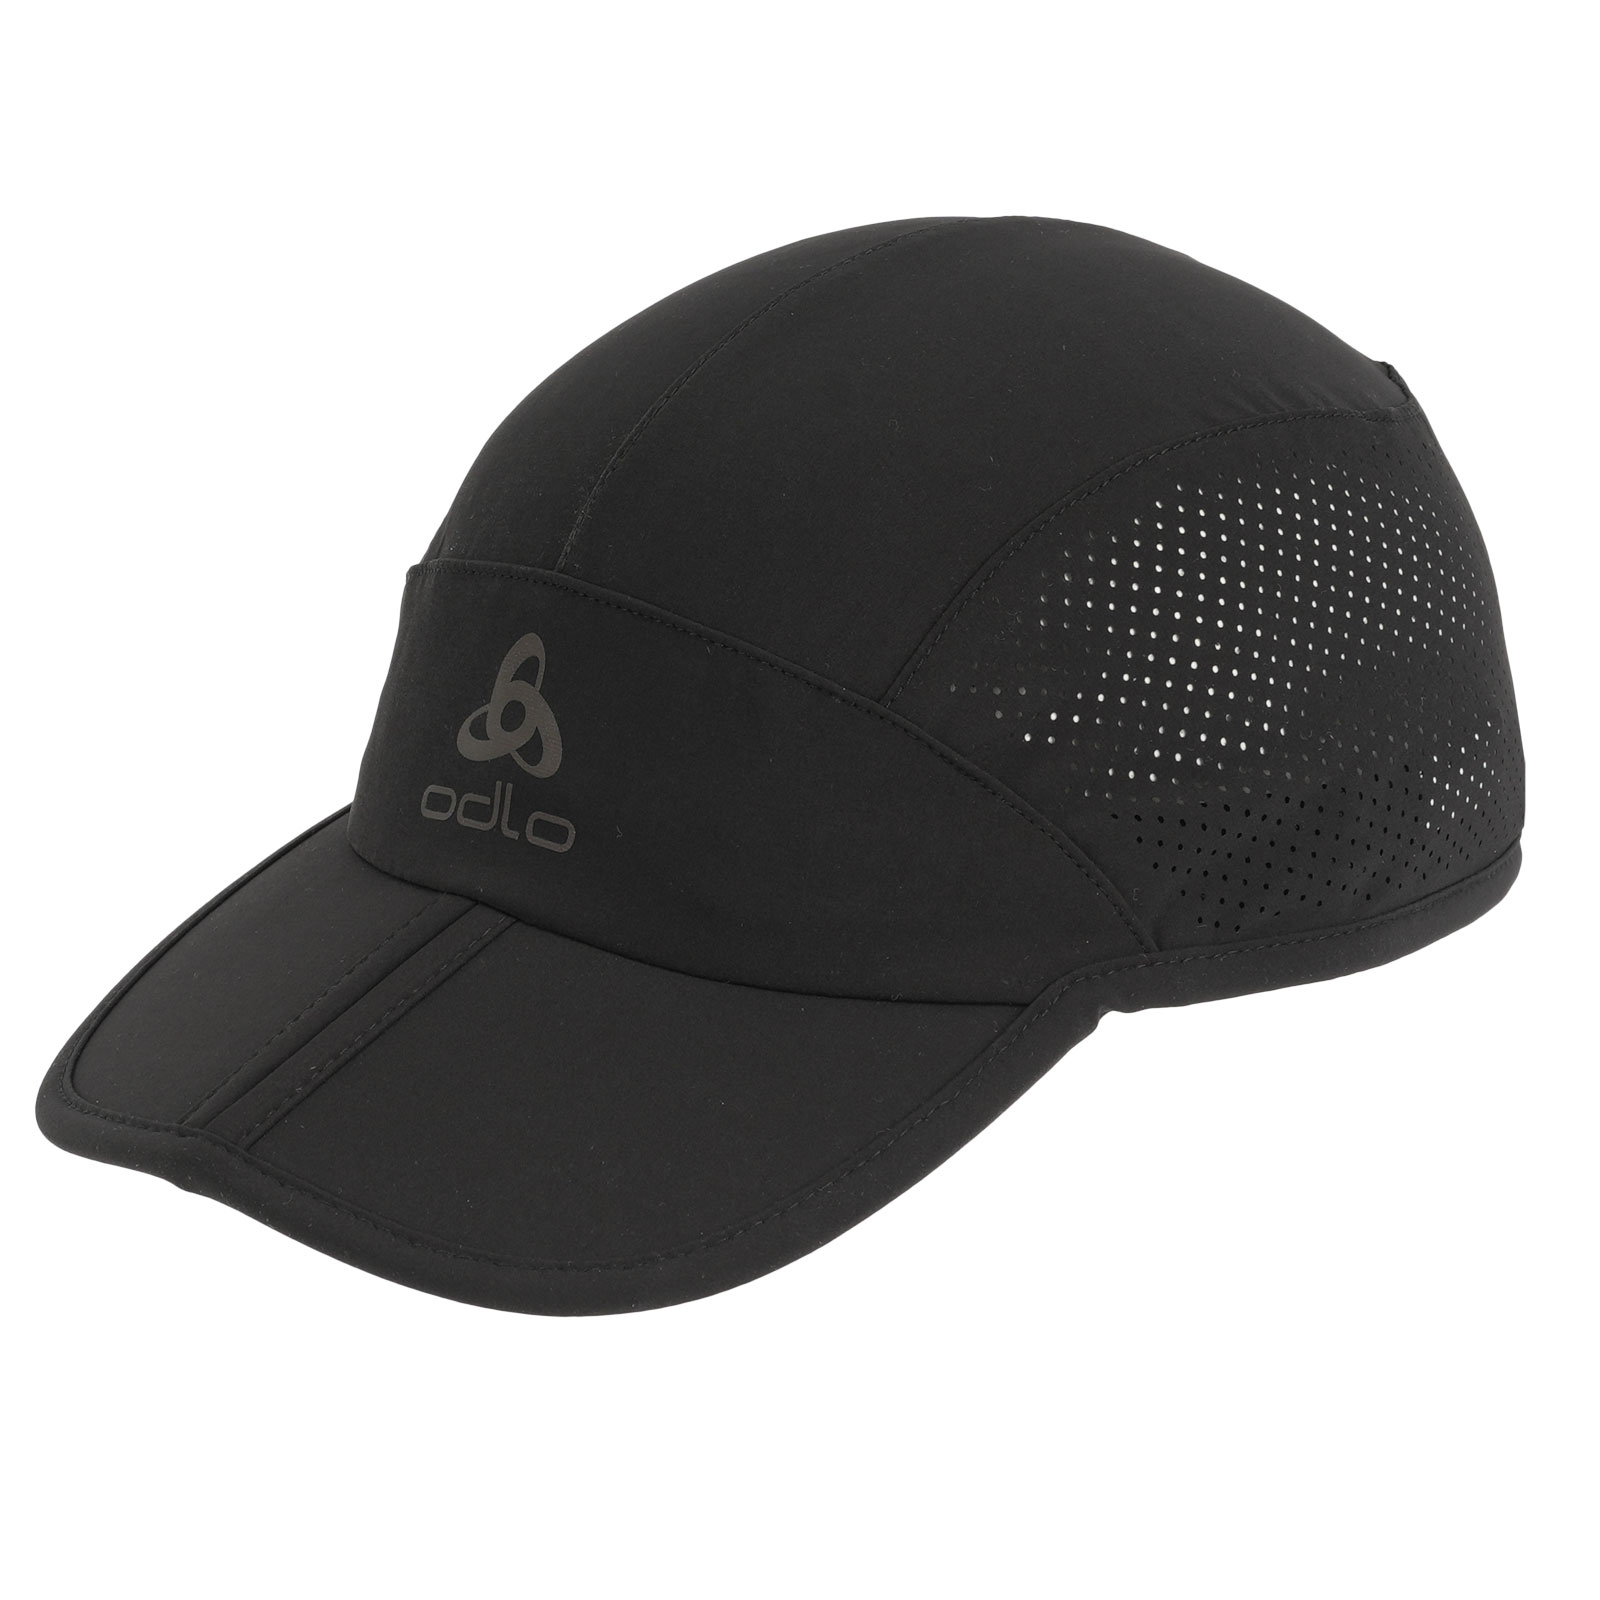 Produktbild von Odlo Performance X-Light Cap - schwarz